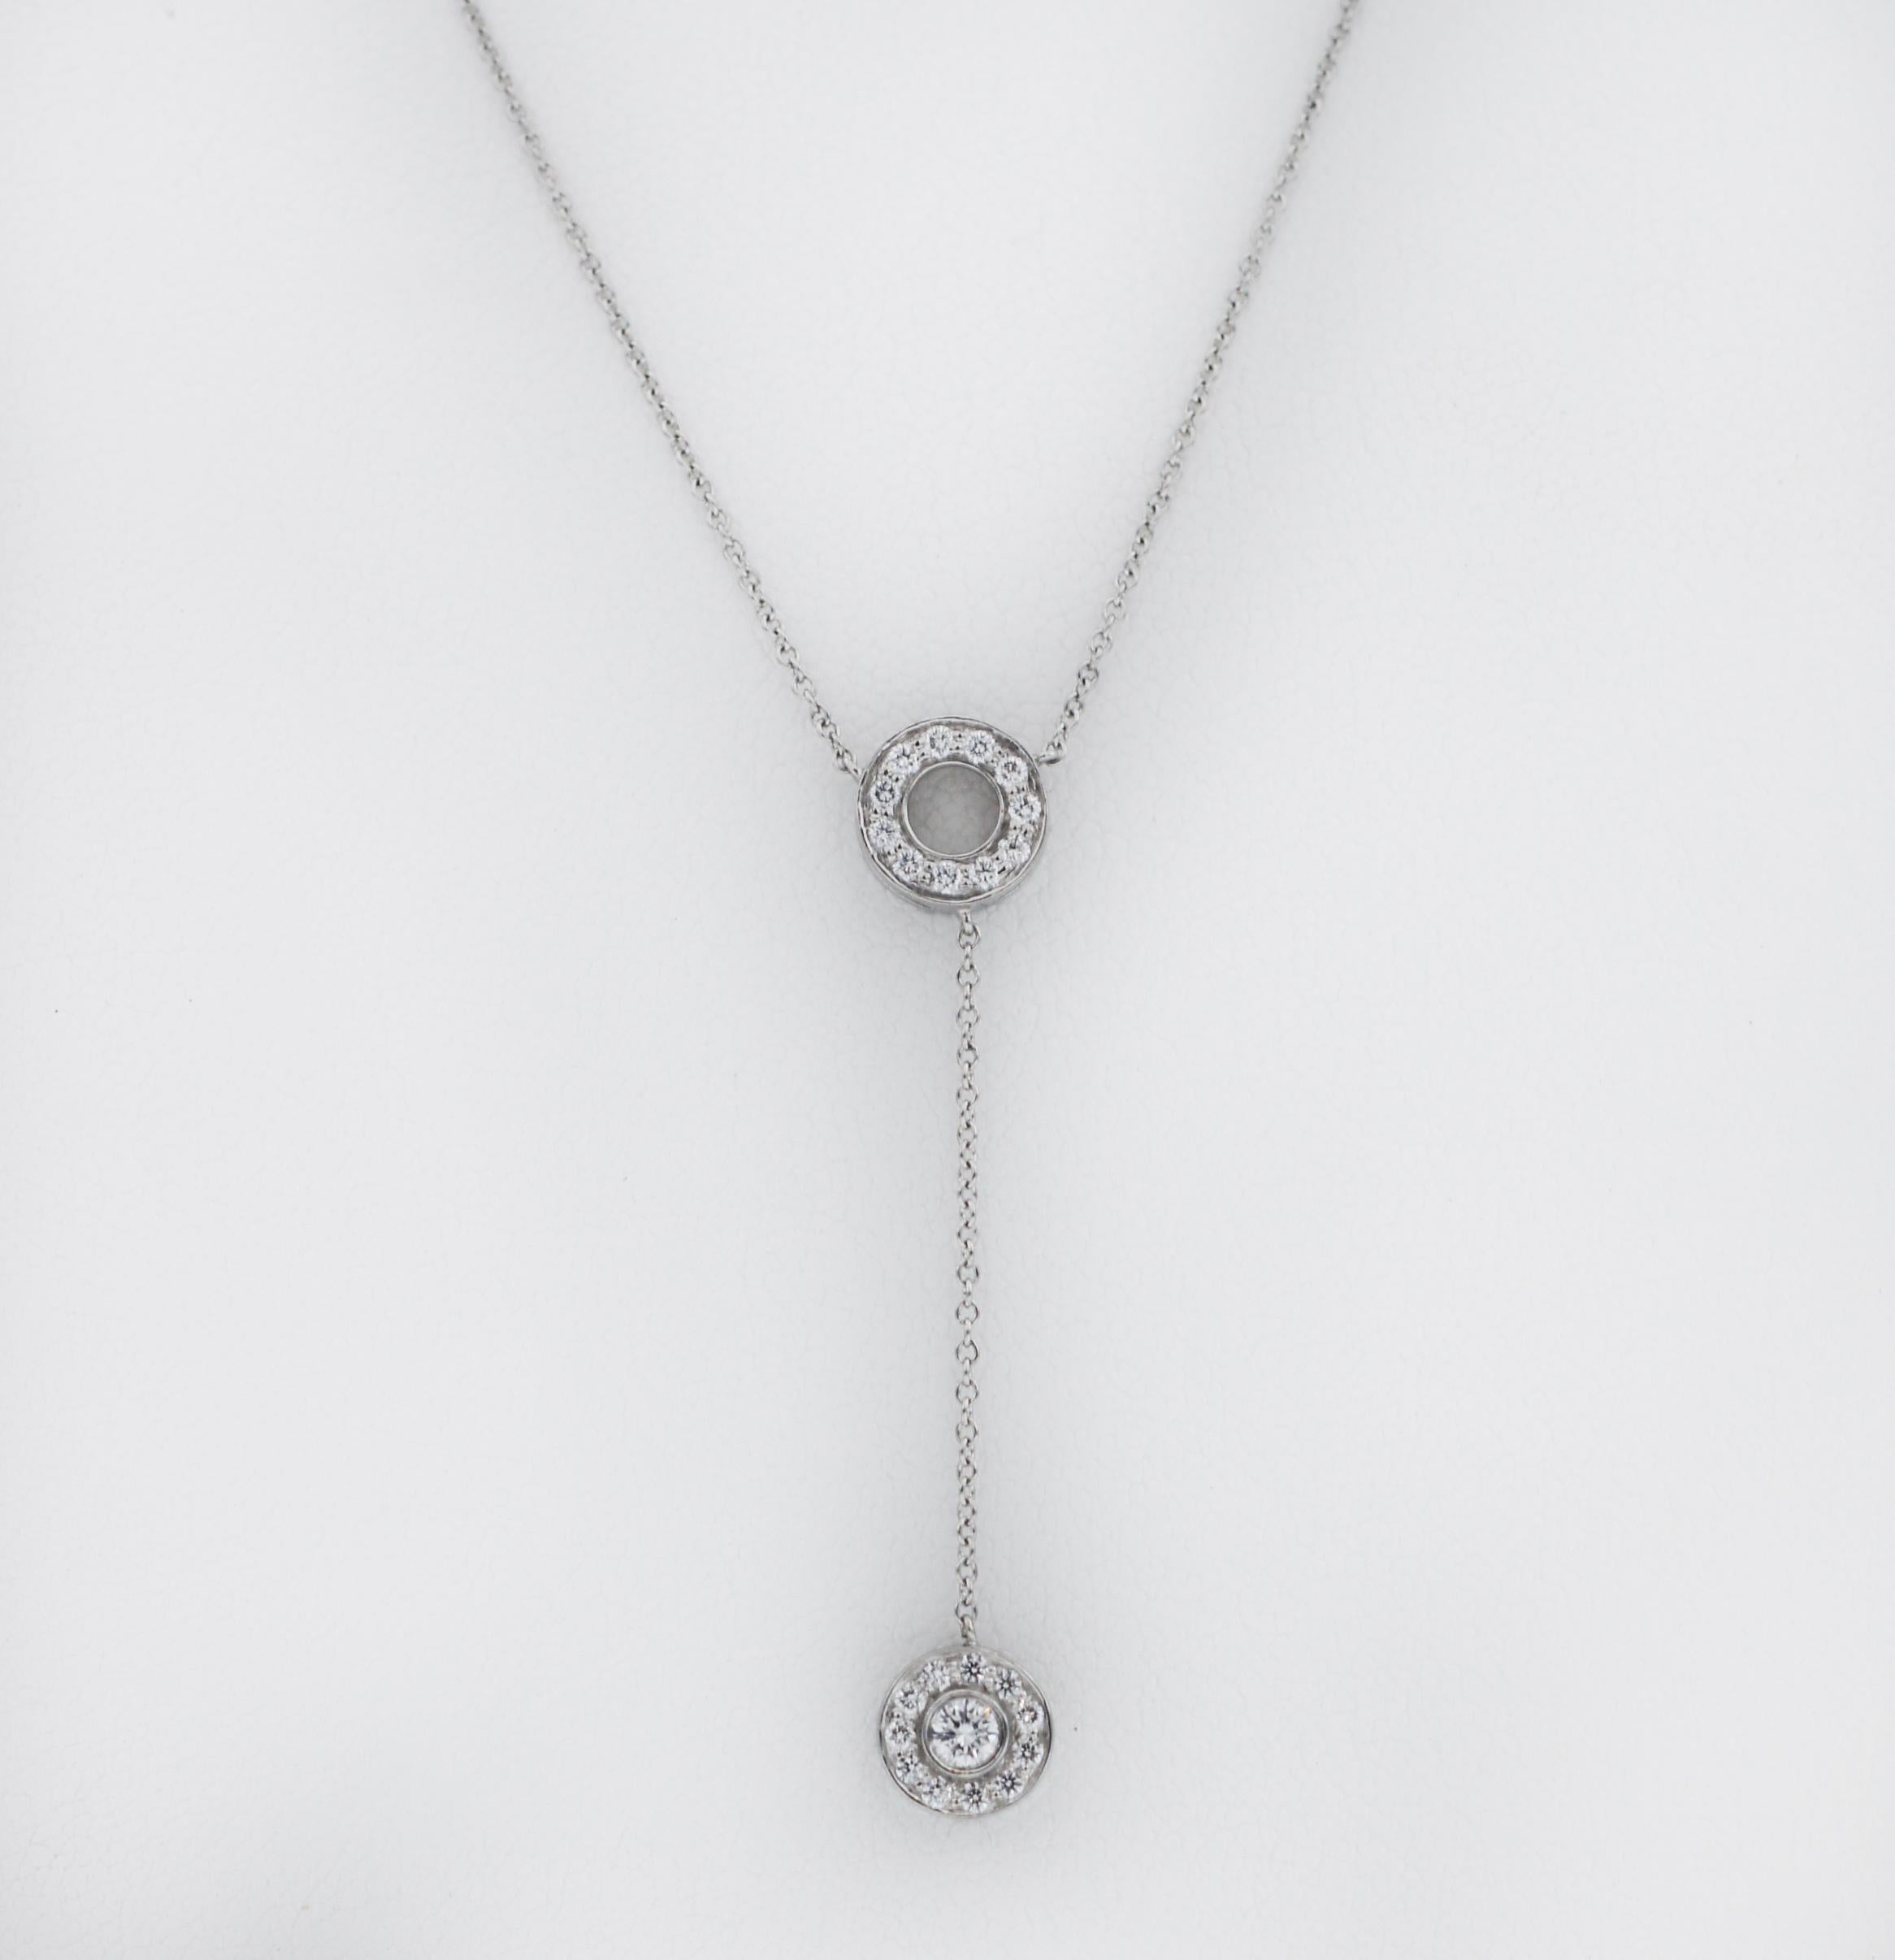 Tiffany & Co.
Platine (PT950)
Collection Collectional
Pendentif de type Lariat
Circlet reliant le pendentif Approx. 9mm de diamètre
Pendentif Circlet Drop Approx. 8mm de diamètre
Chaîne de 16